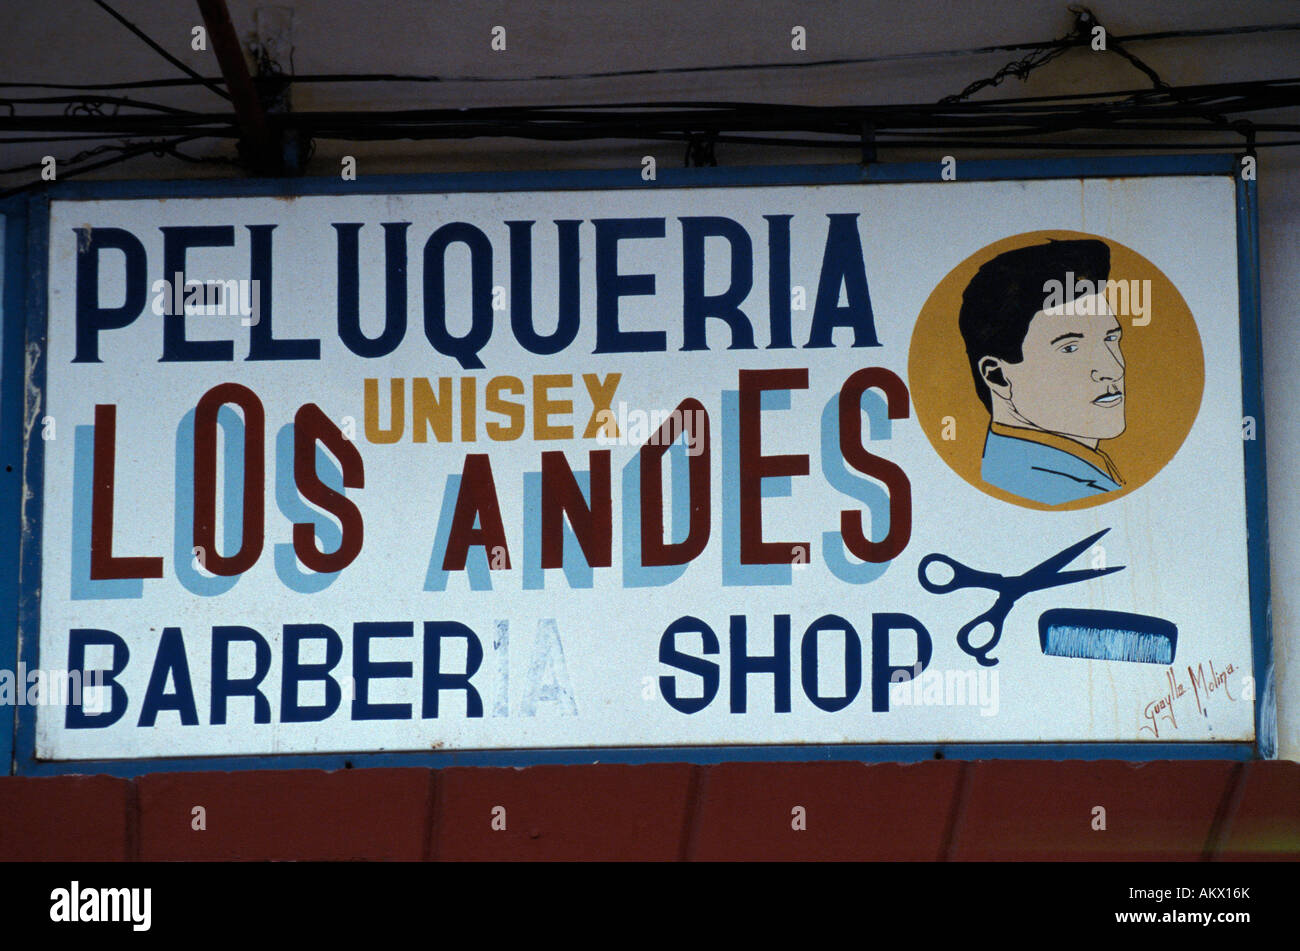 Unisex barbershop sign, Riobamba, Ecuador Stock Photo